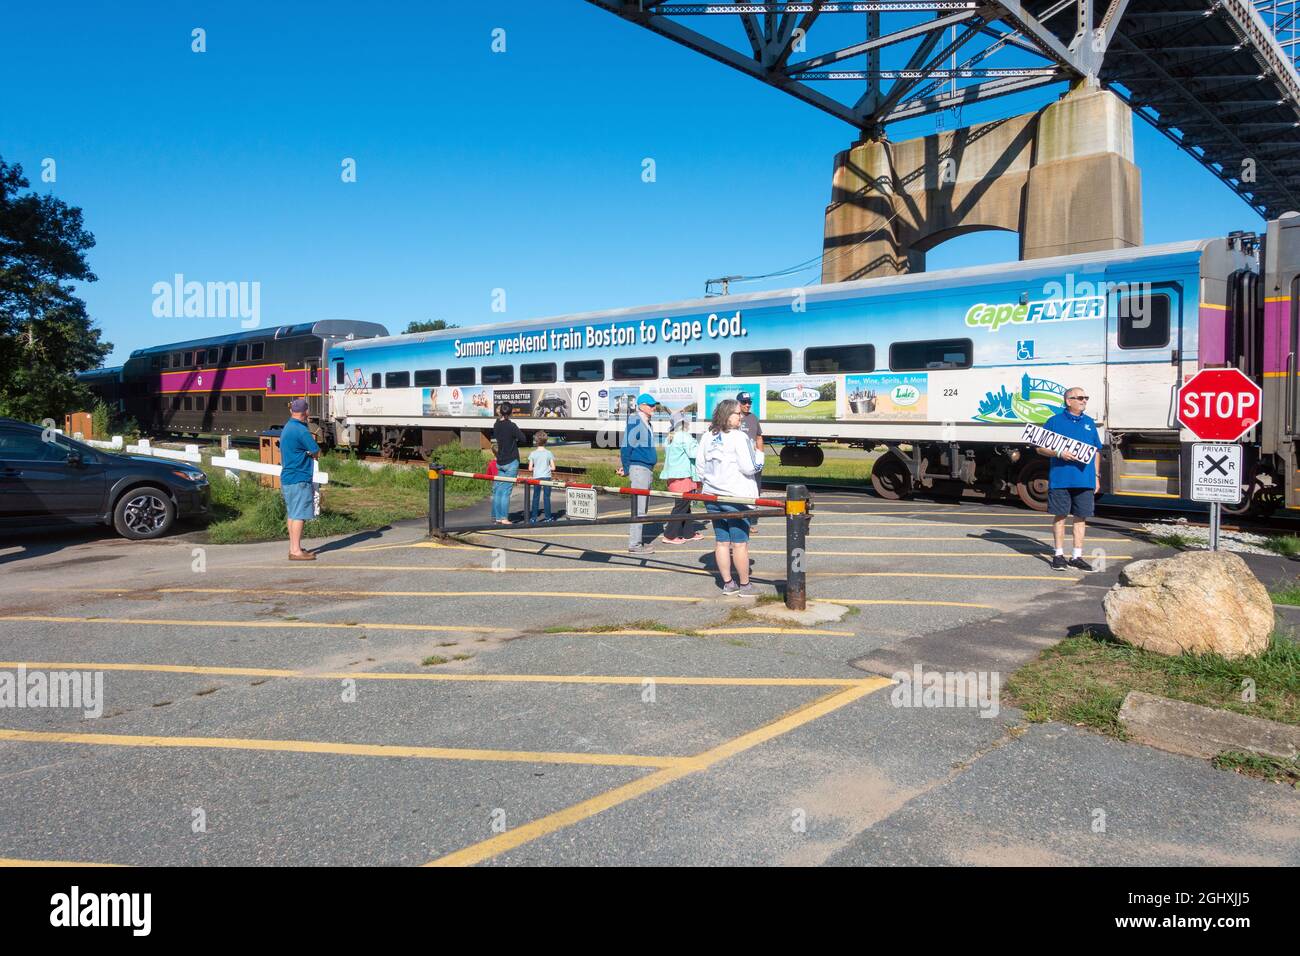 Tren de verano de Cape Cod Flyer desde Boston llegando a la parada del canal de Cape Cod en Bourne, Massachusetts Foto de stock